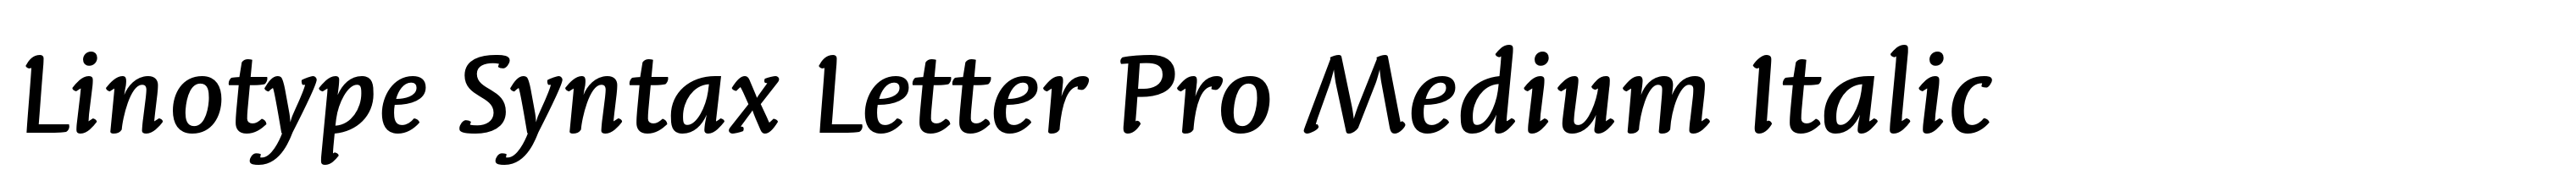 Linotype Syntax Letter Pro Medium Italic